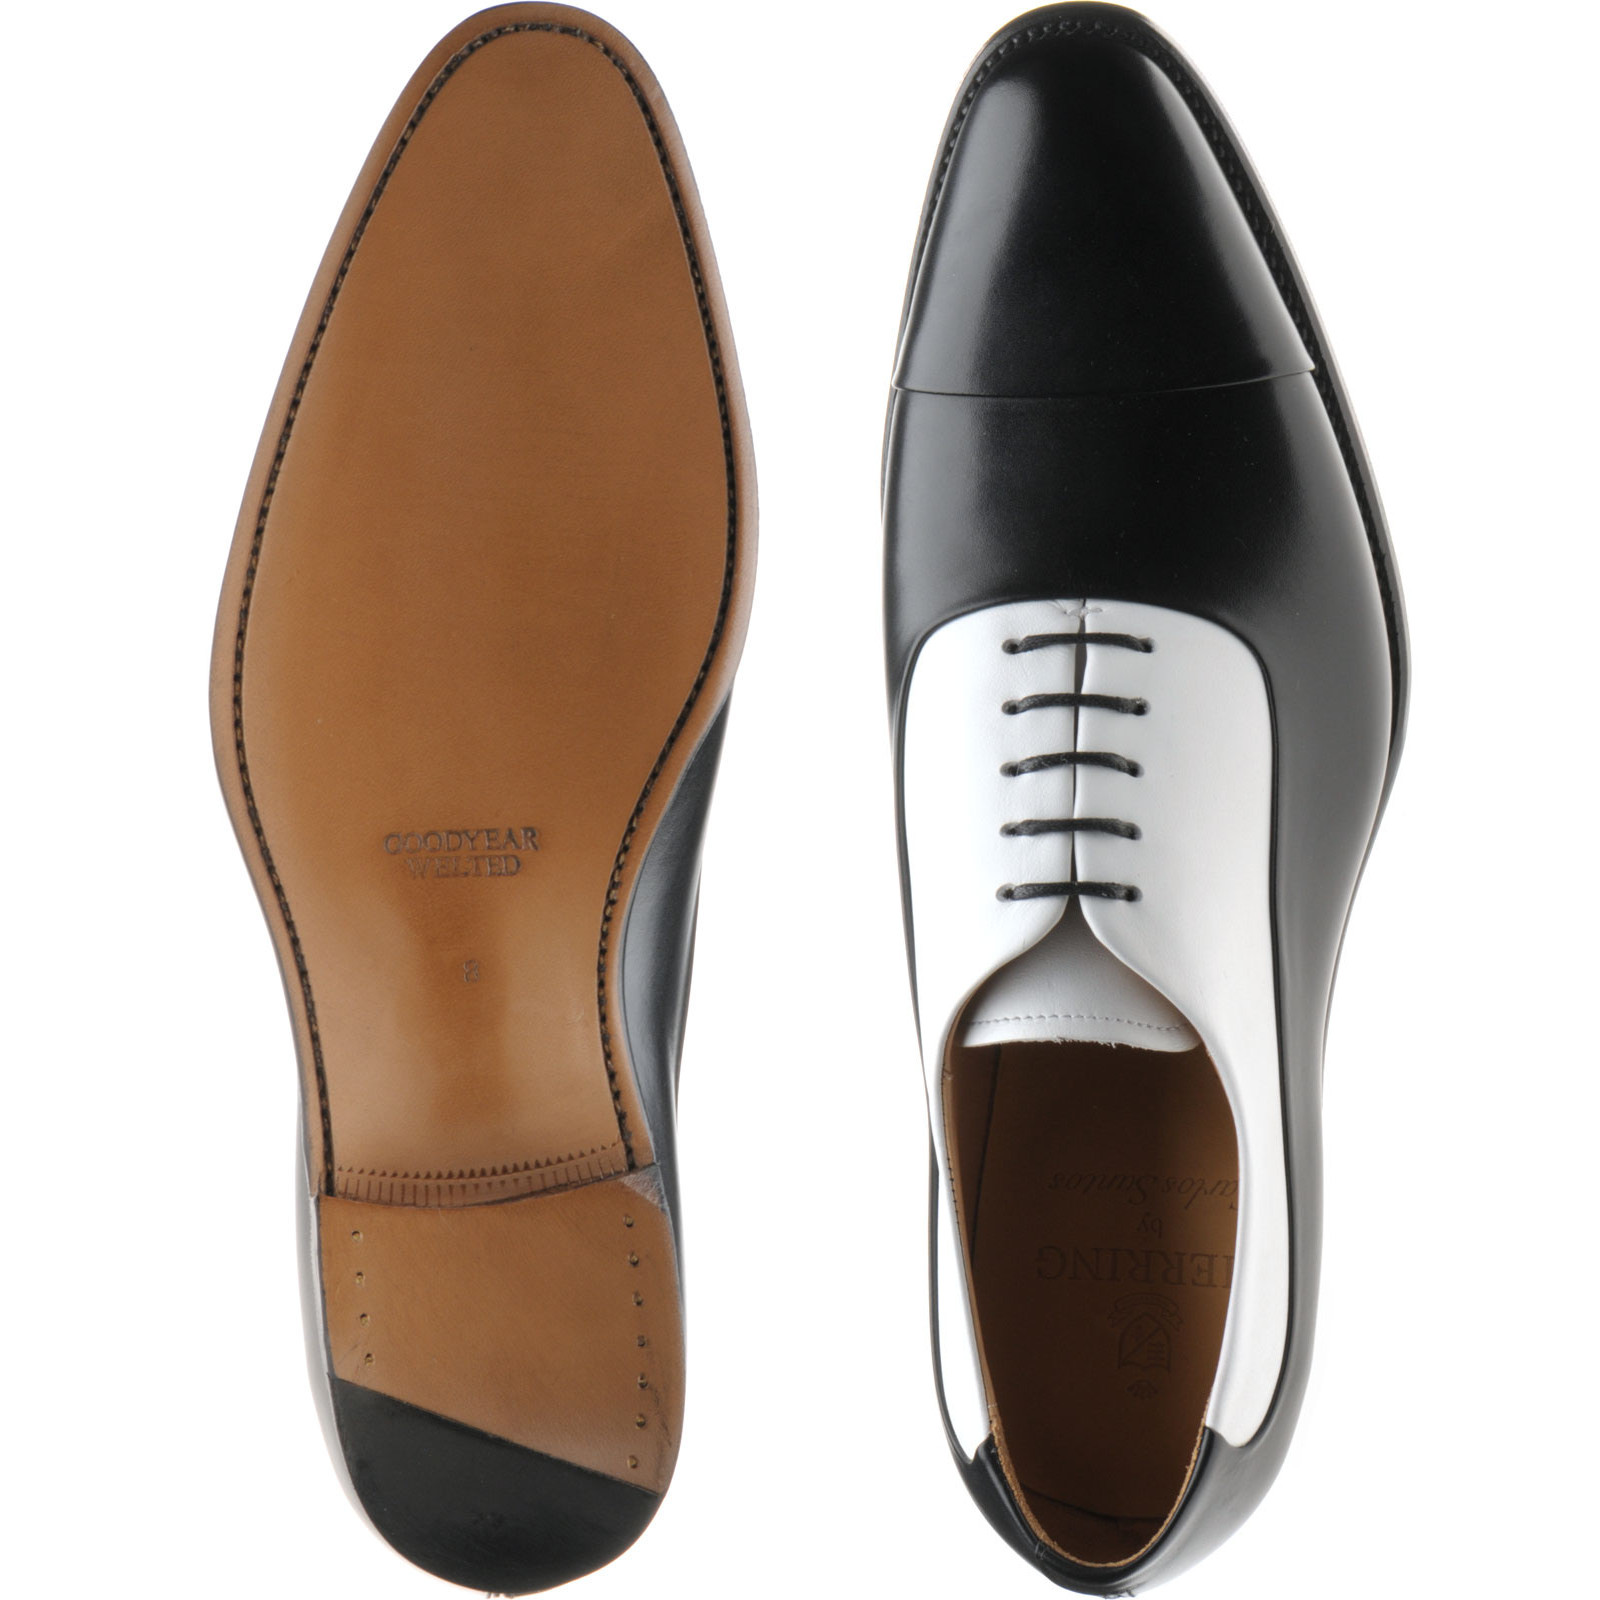 Herring shoes | Herring Classic | Gusbourne two-tone Oxfords in Black ...